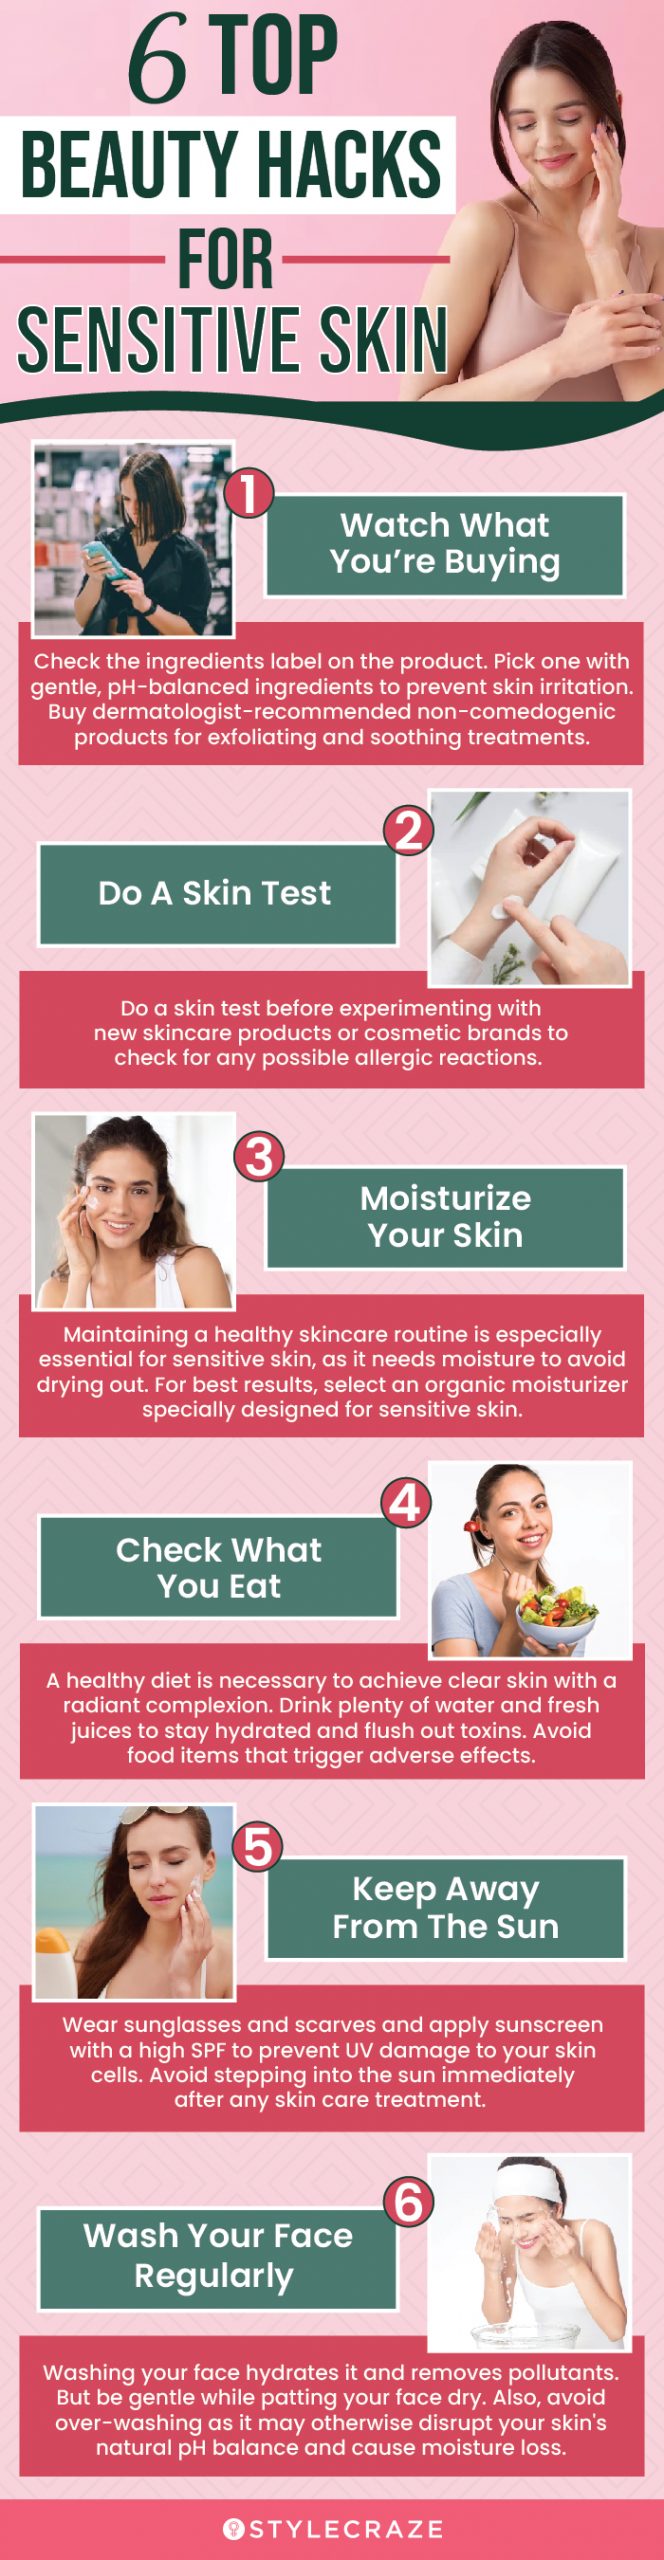 6 top beauty hacks for sensitive skin (infographic)